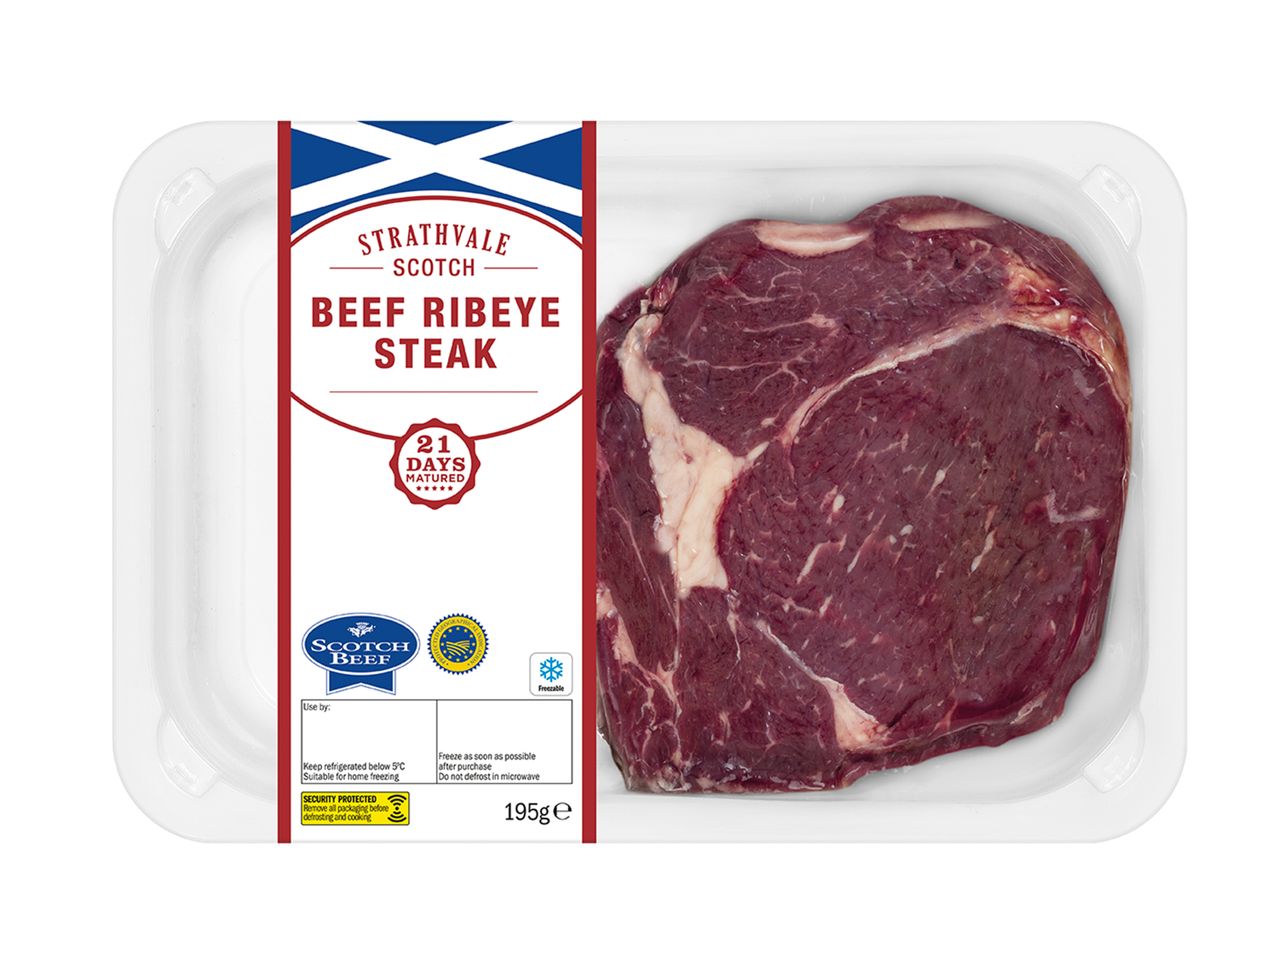 Go to full screen view: Strathvale Scotch Beef Ribeye Steak - Image 1